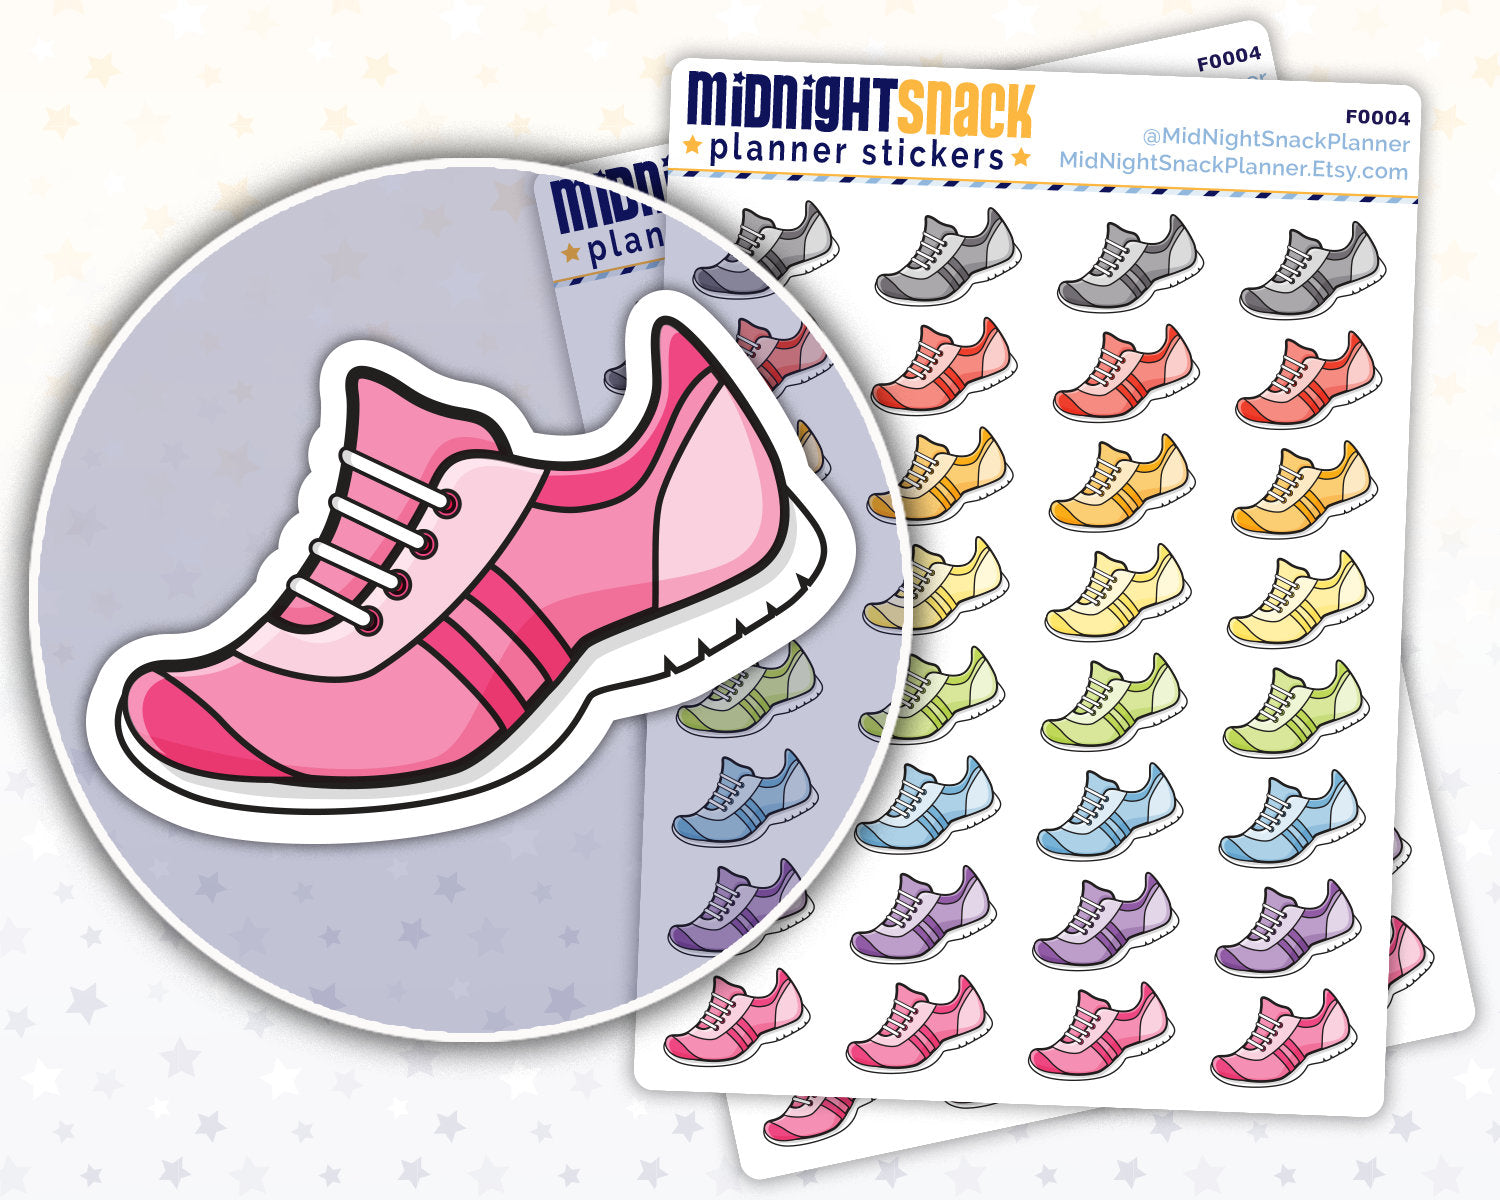 Running Shoe Planner Stickers from Midnight Snack Planner